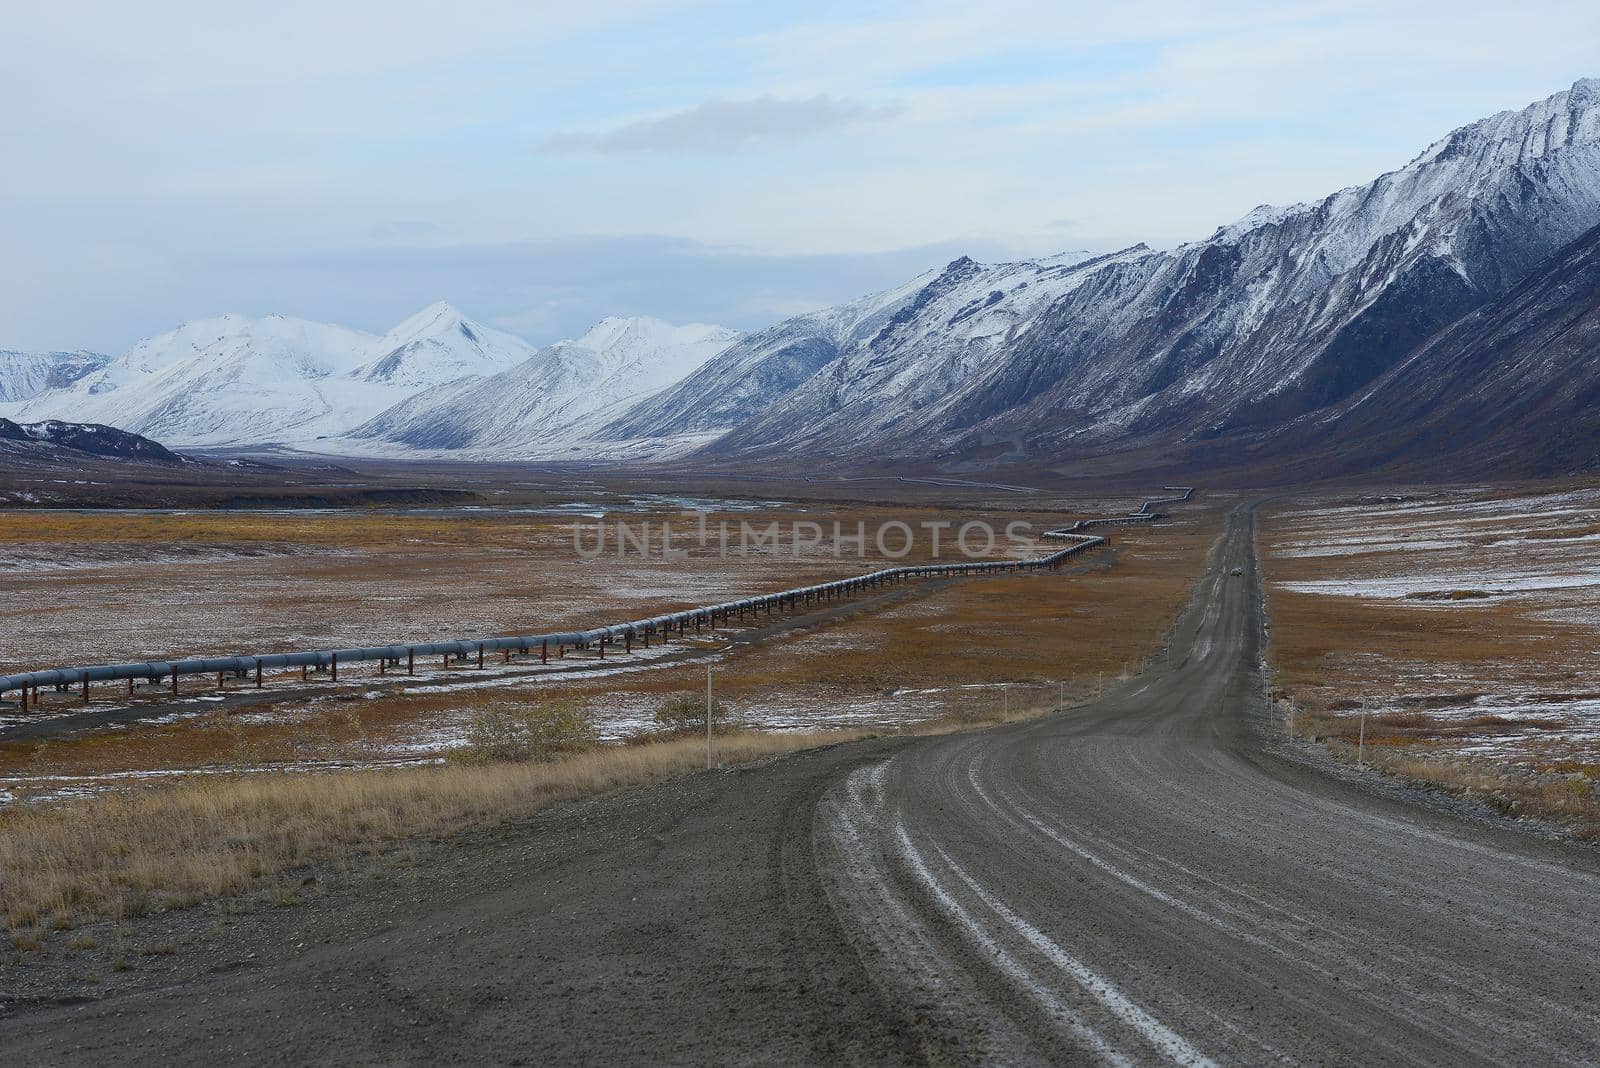 dalton highway in alaska at north slope